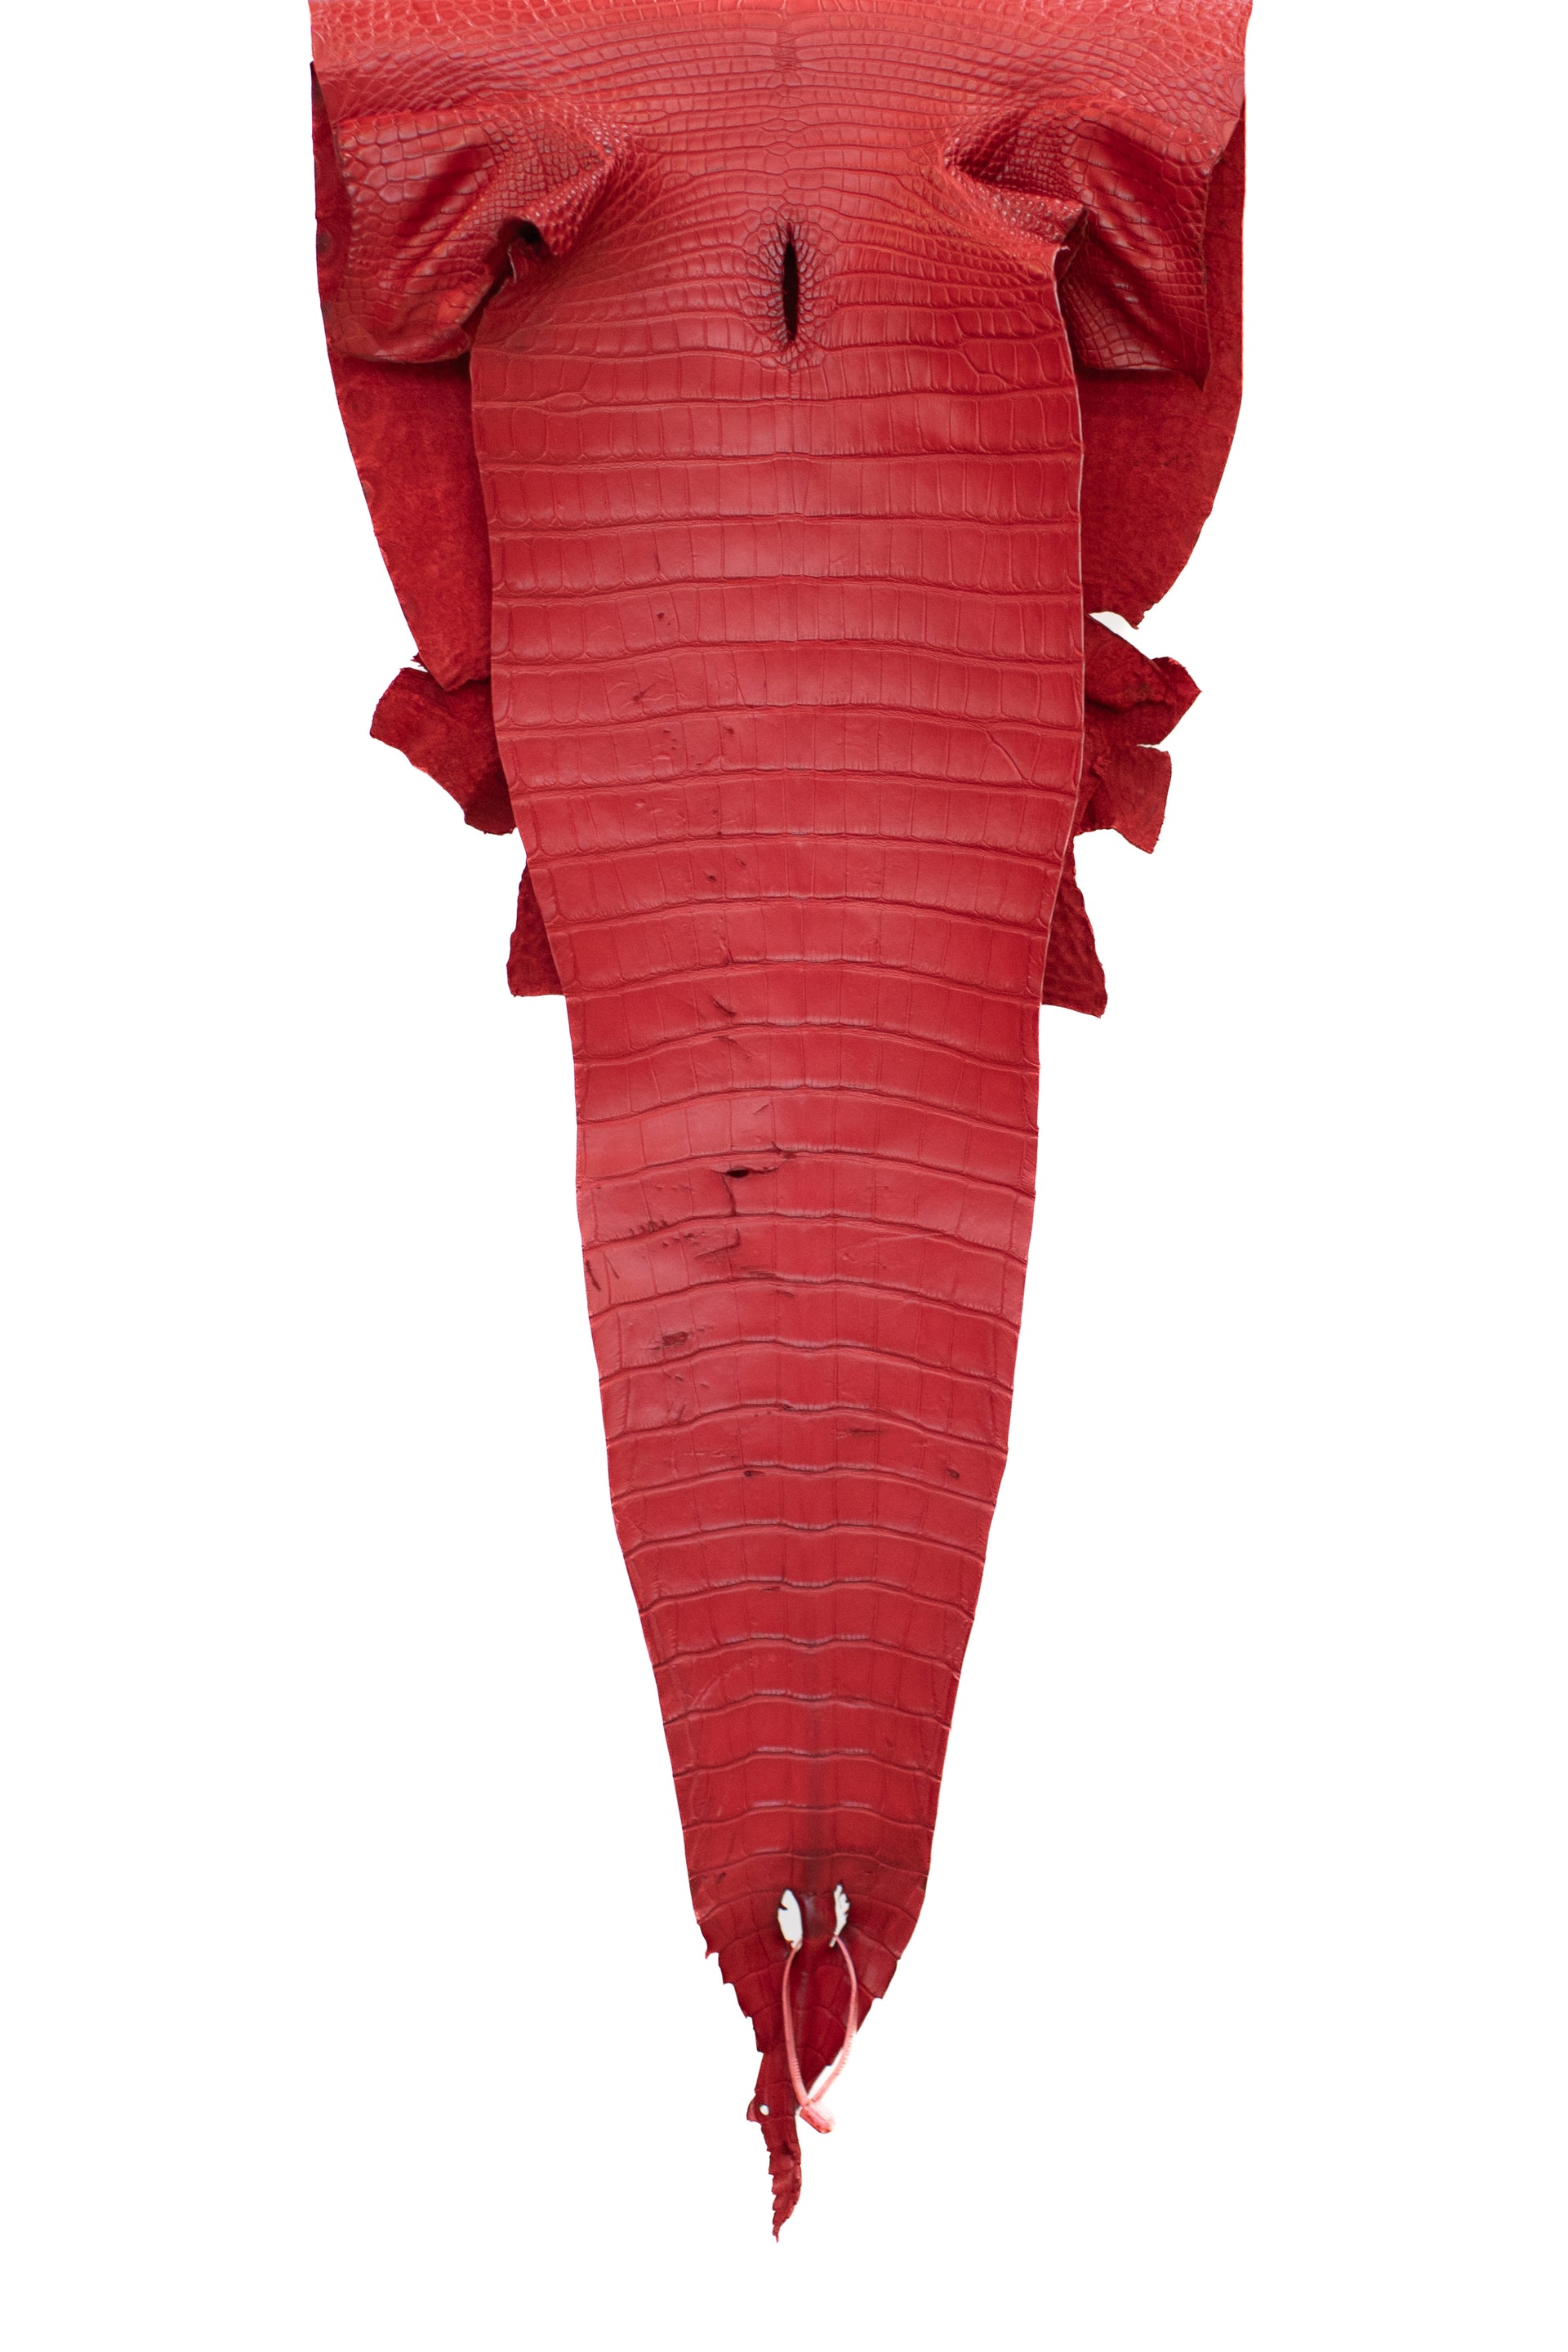 39 cm Grade 2/3 Candy Apple Red Matte Farm American Alligator Leather - Tag: FL18-0052181